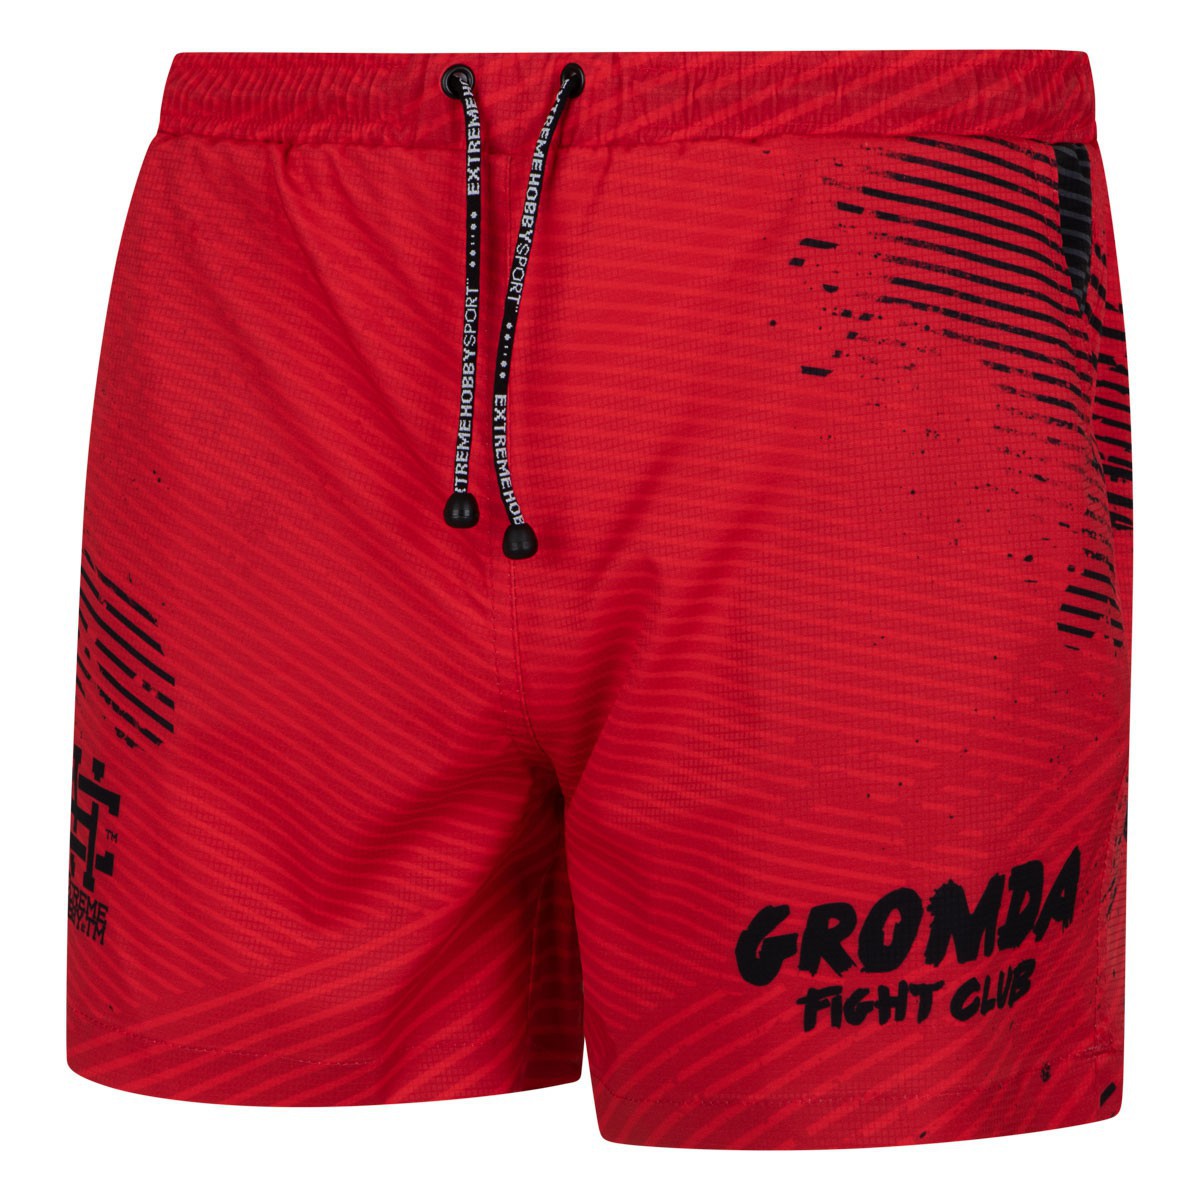 Pantalones cortos de boxeo para hombre GROMDA 2022 Extreme Hobby